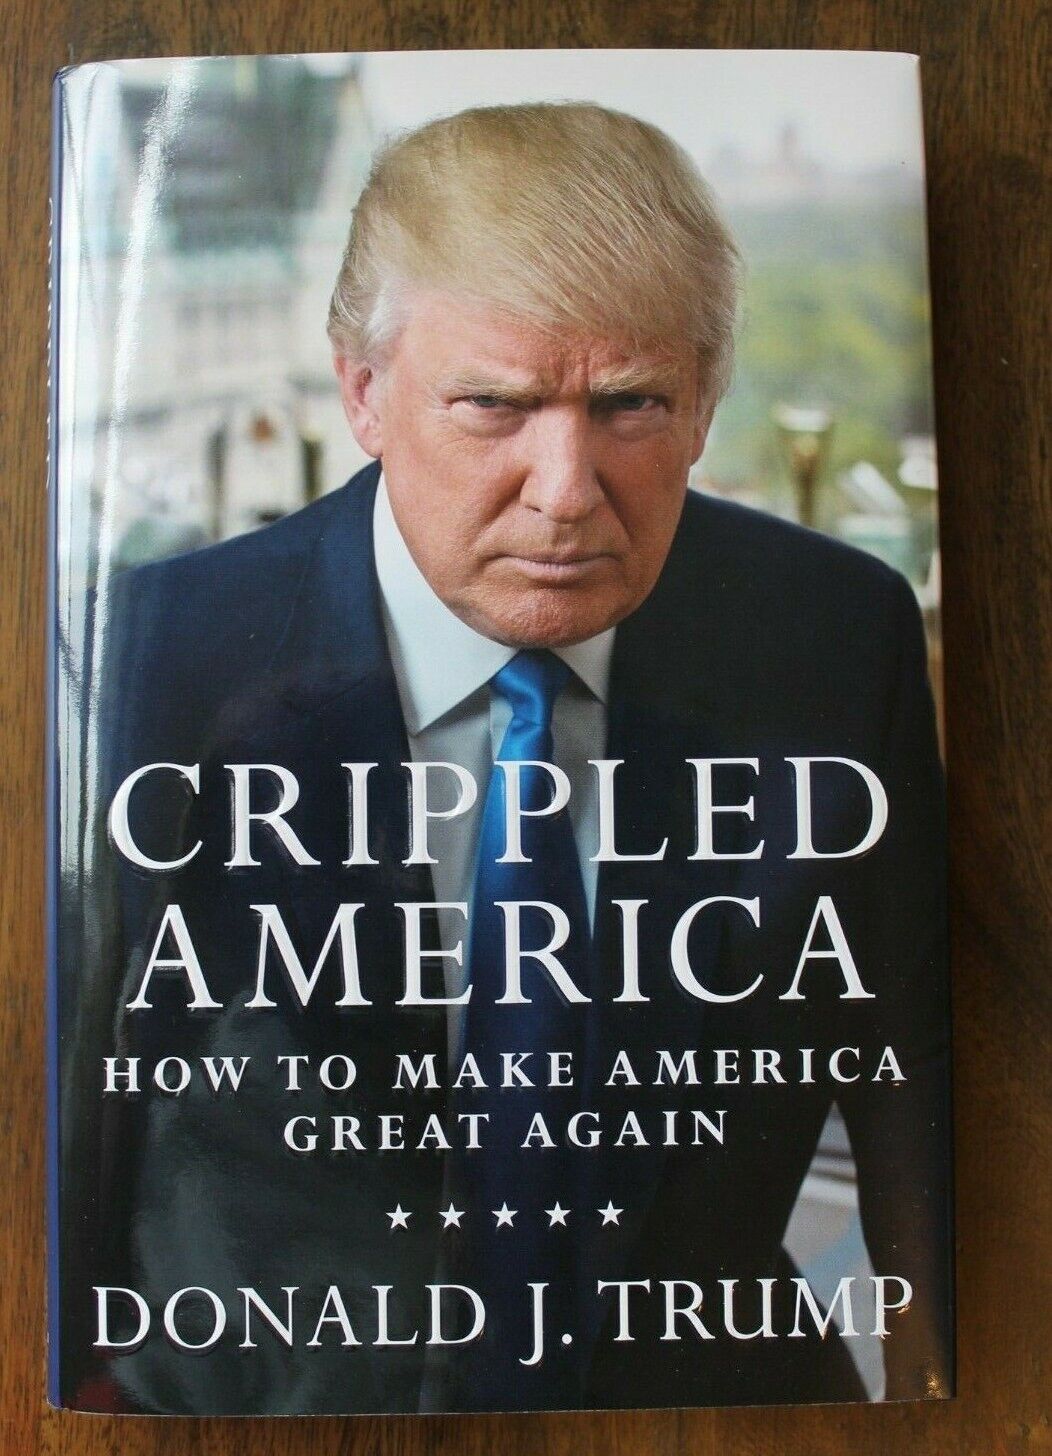 DONALD J TRUMP SIGNED BOOK CRIPPLED AMERICA WITH COA 6633/10000